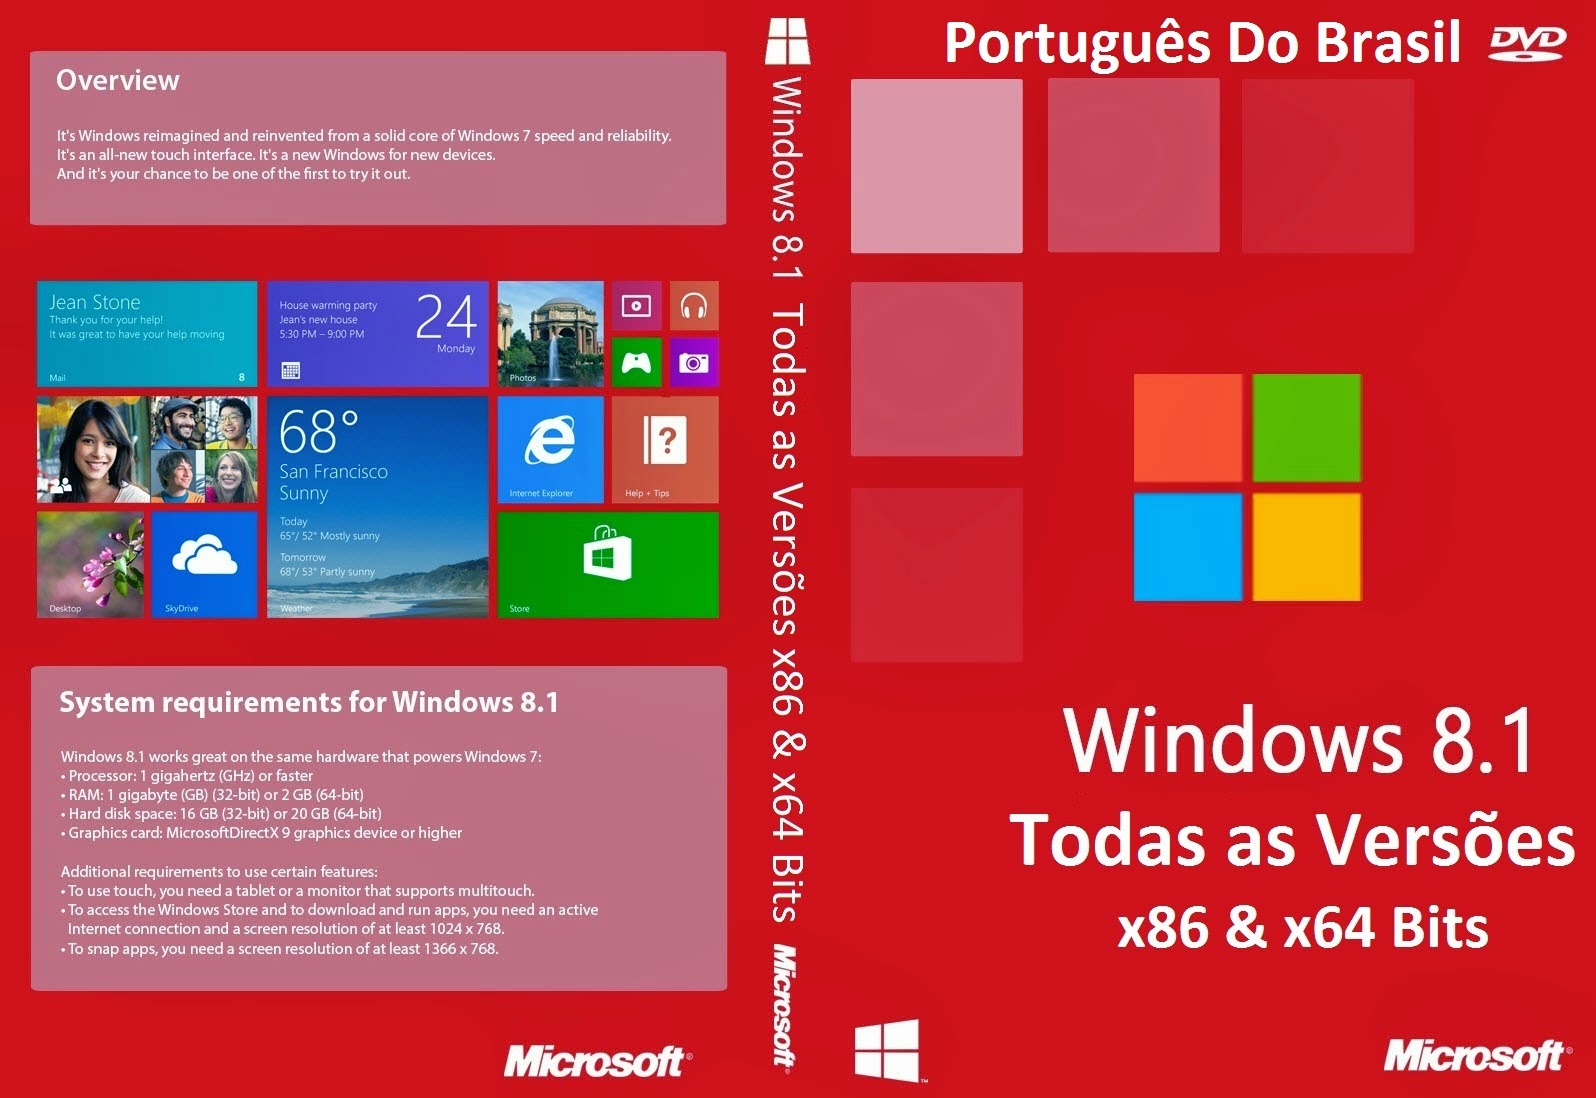 [DOWNLOAD]Baixar Windows 8.1 x86 e x64 Bits Todas as Versões Português-BR DVD Full ISO Download - MEGA Windows+8.1+Todas+as+Versões+x86+e+x64+Bits+DVD+Capa